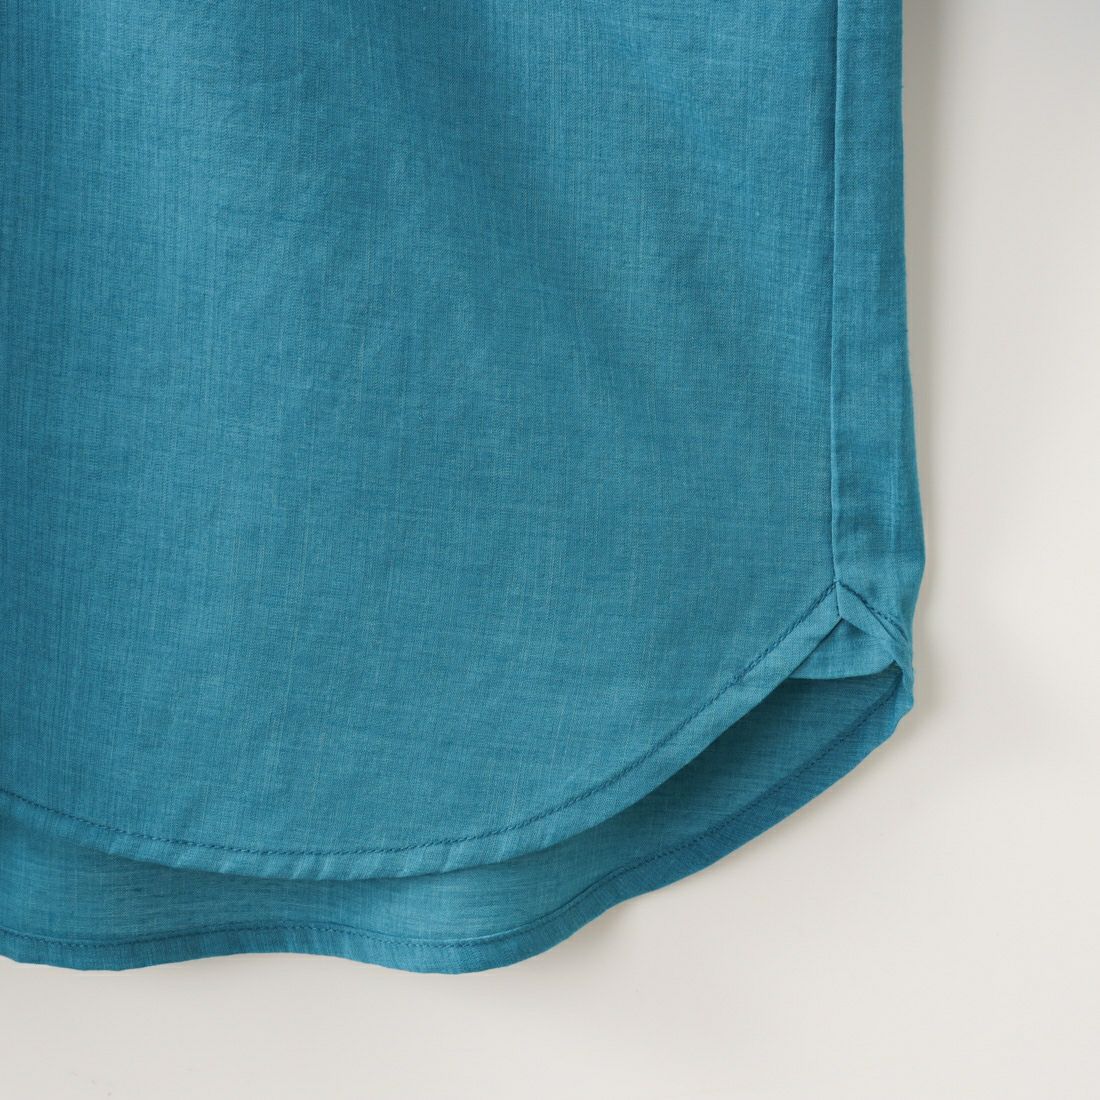 Jeans Factory Clothes [ジーンズファクトリークローズ] ロングスリーブ テックリネンバンドカラーシャツ [EPC-31100] 5 BLUE